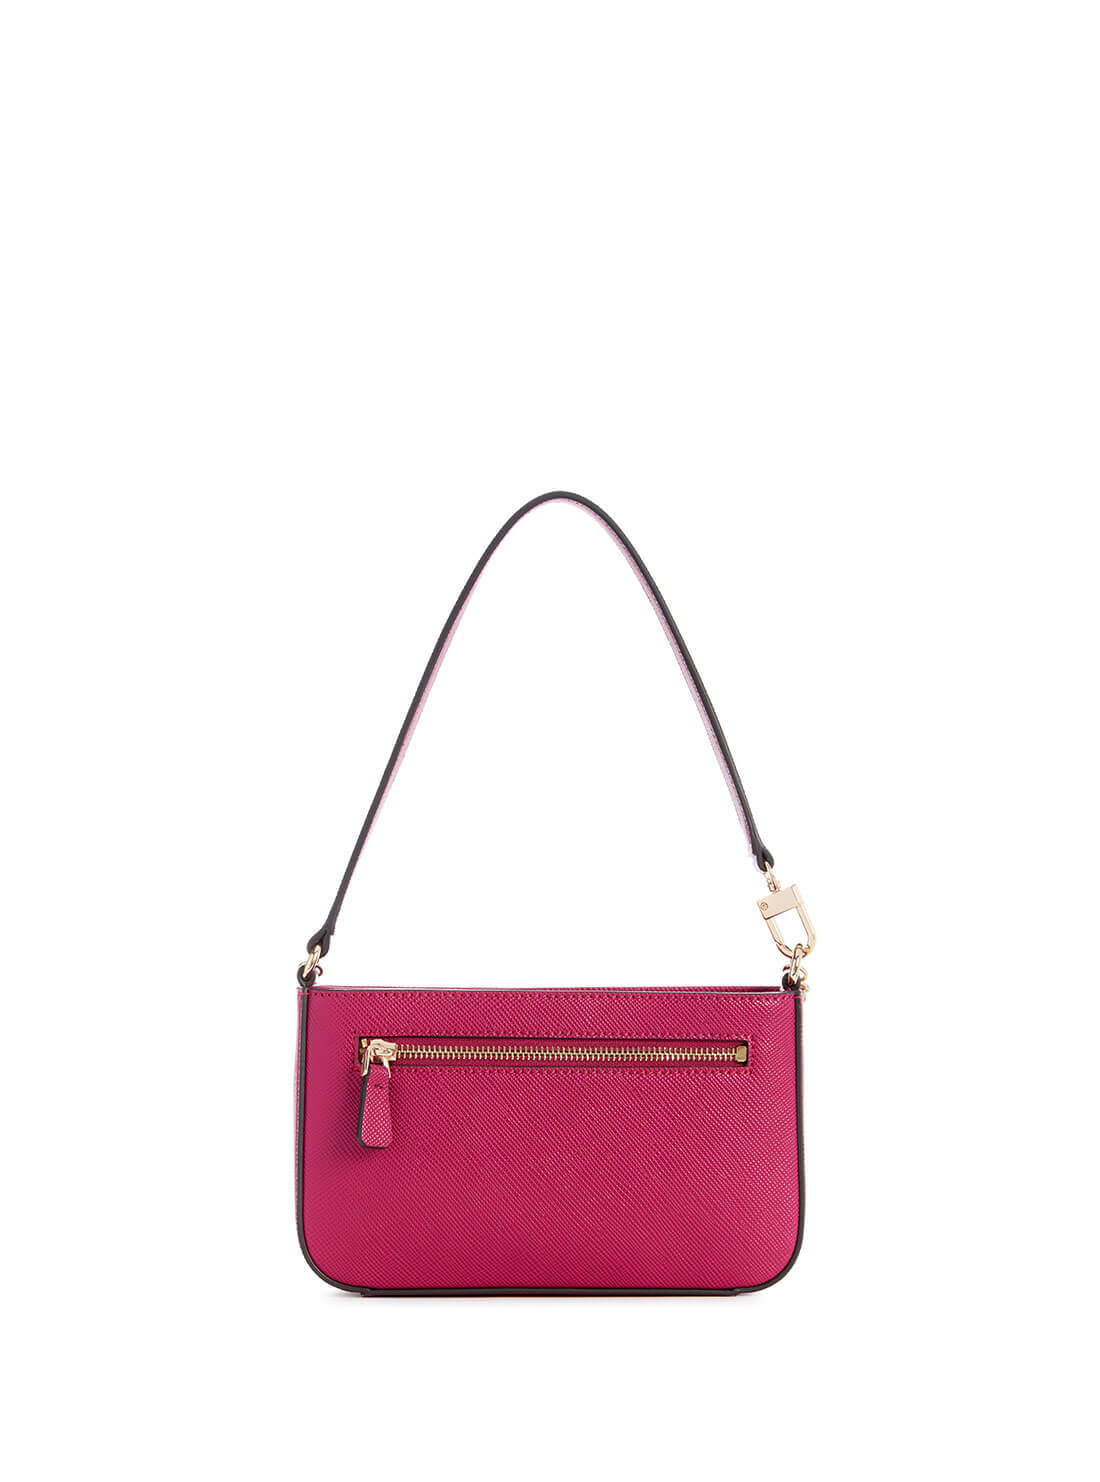 Women's Boysenberry Pink Brynlee Mini Shoulder Bag back view 